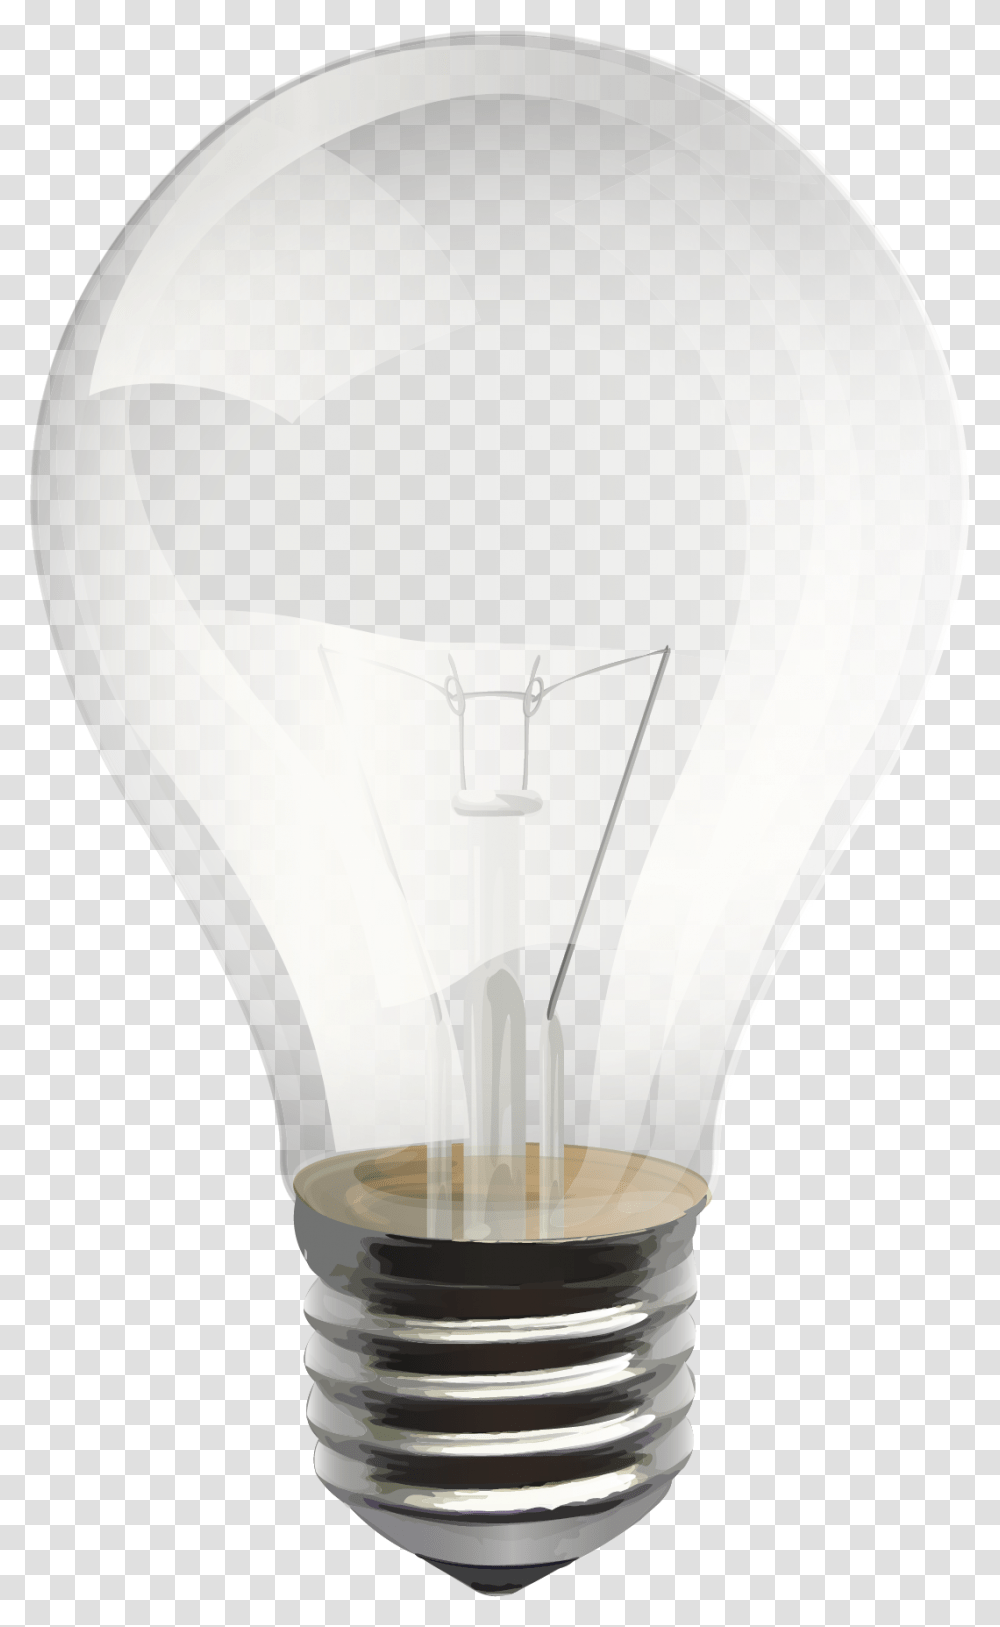 Light Bulb Images Only Incandescent Light Bulb, Lamp, Lightbulb, Mixer, Appliance Transparent Png